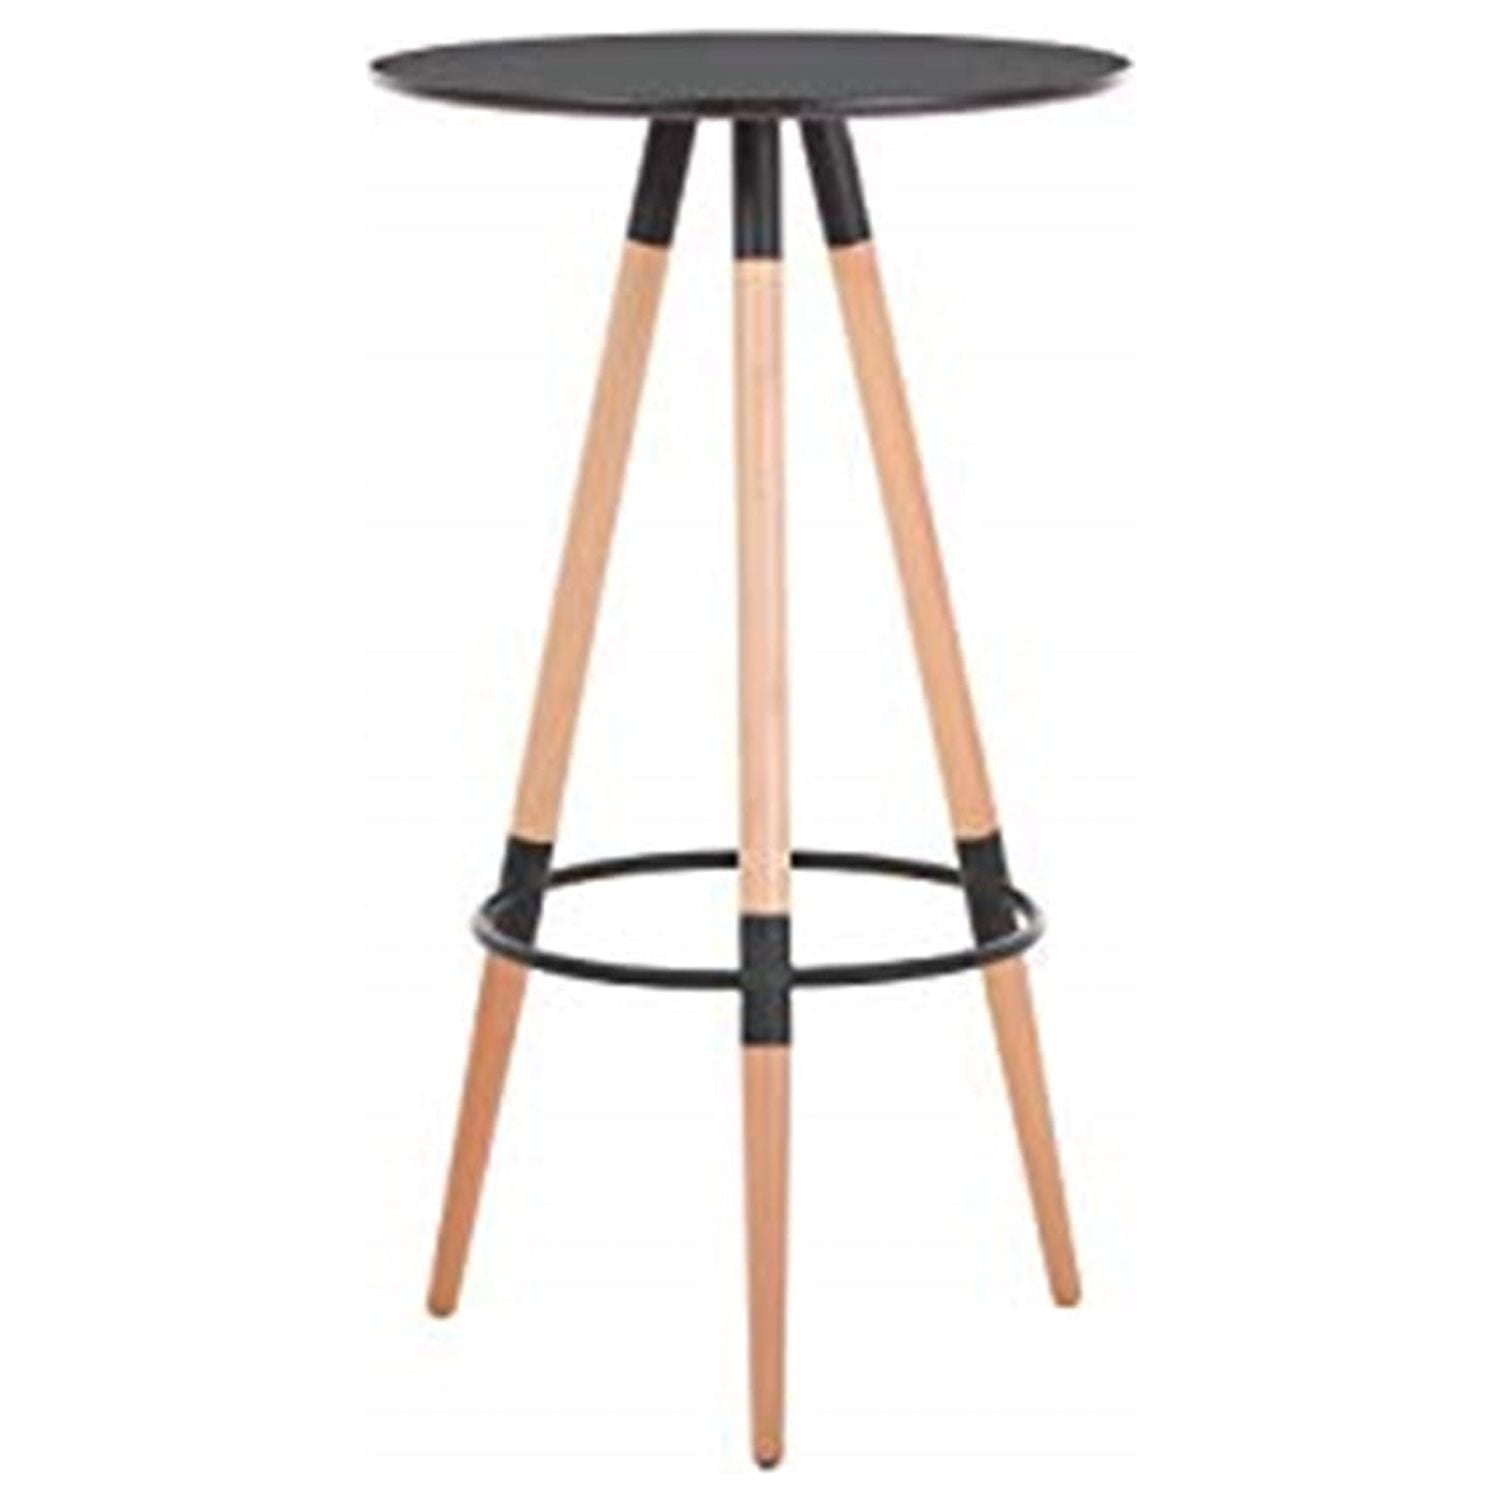 Tr-bar-table-bk 14.5 X 14.5 In. Minimalist Mid Century Modern Design Round Black Bar Height Table